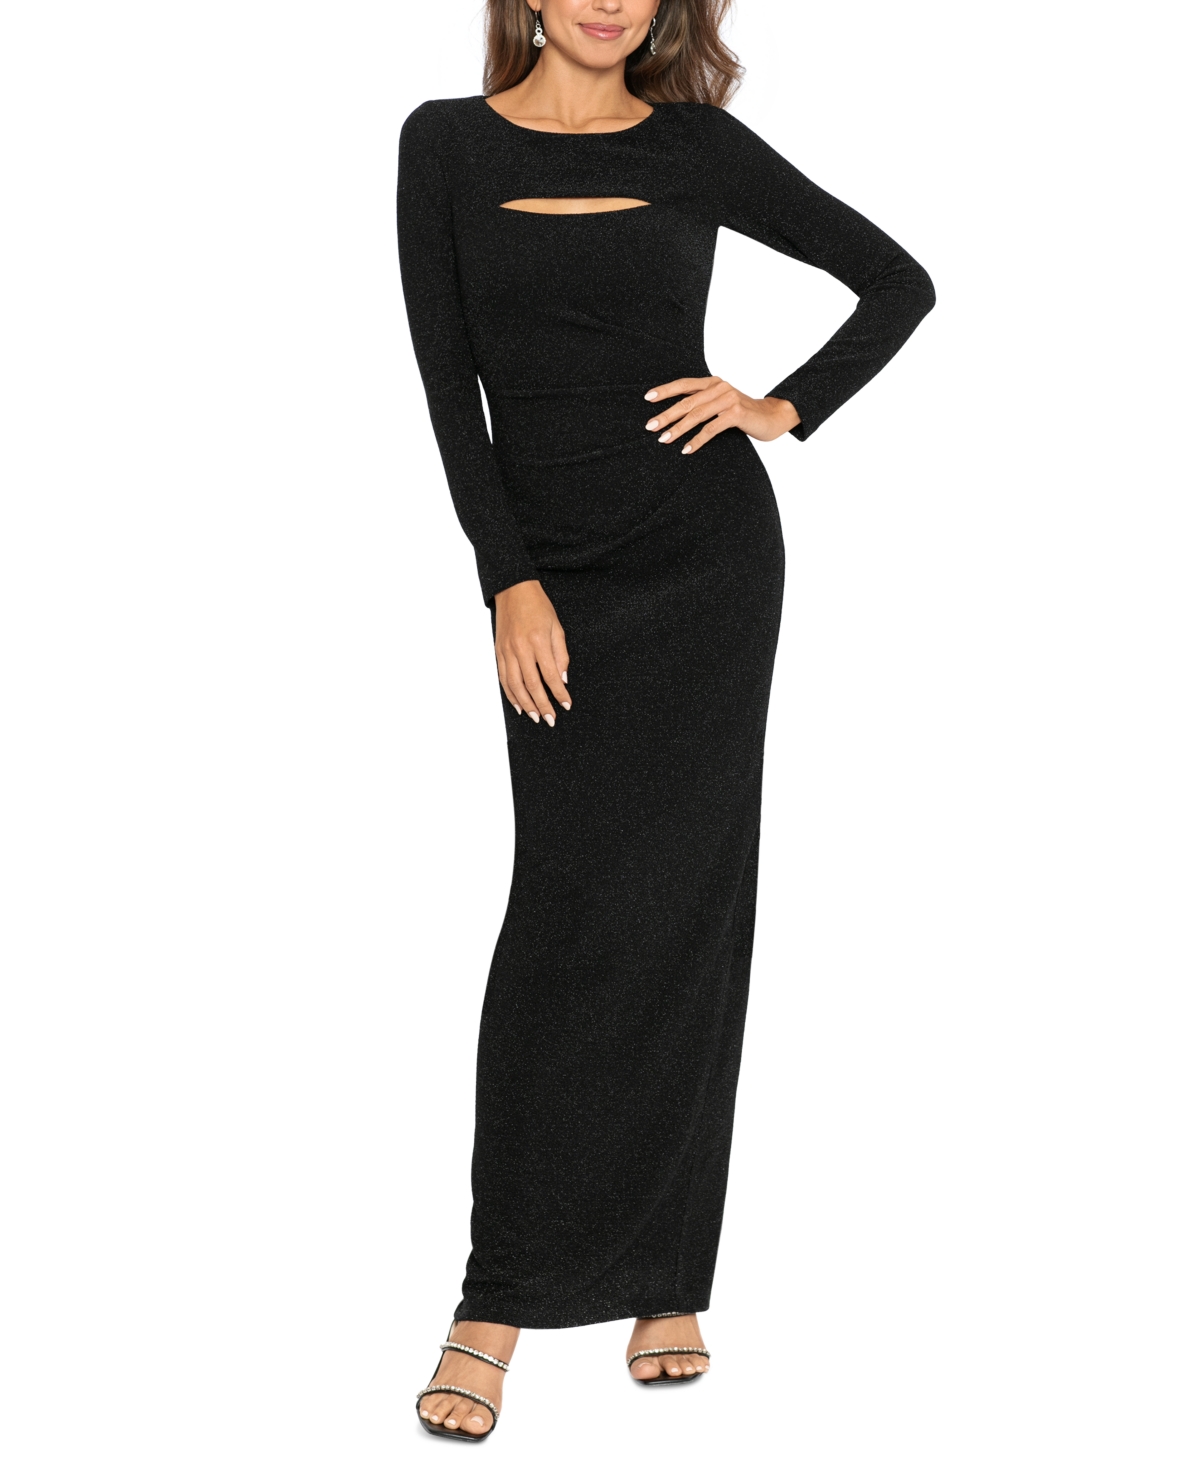 Women's Long-Sleeve Metallic Cutout Dress - Black